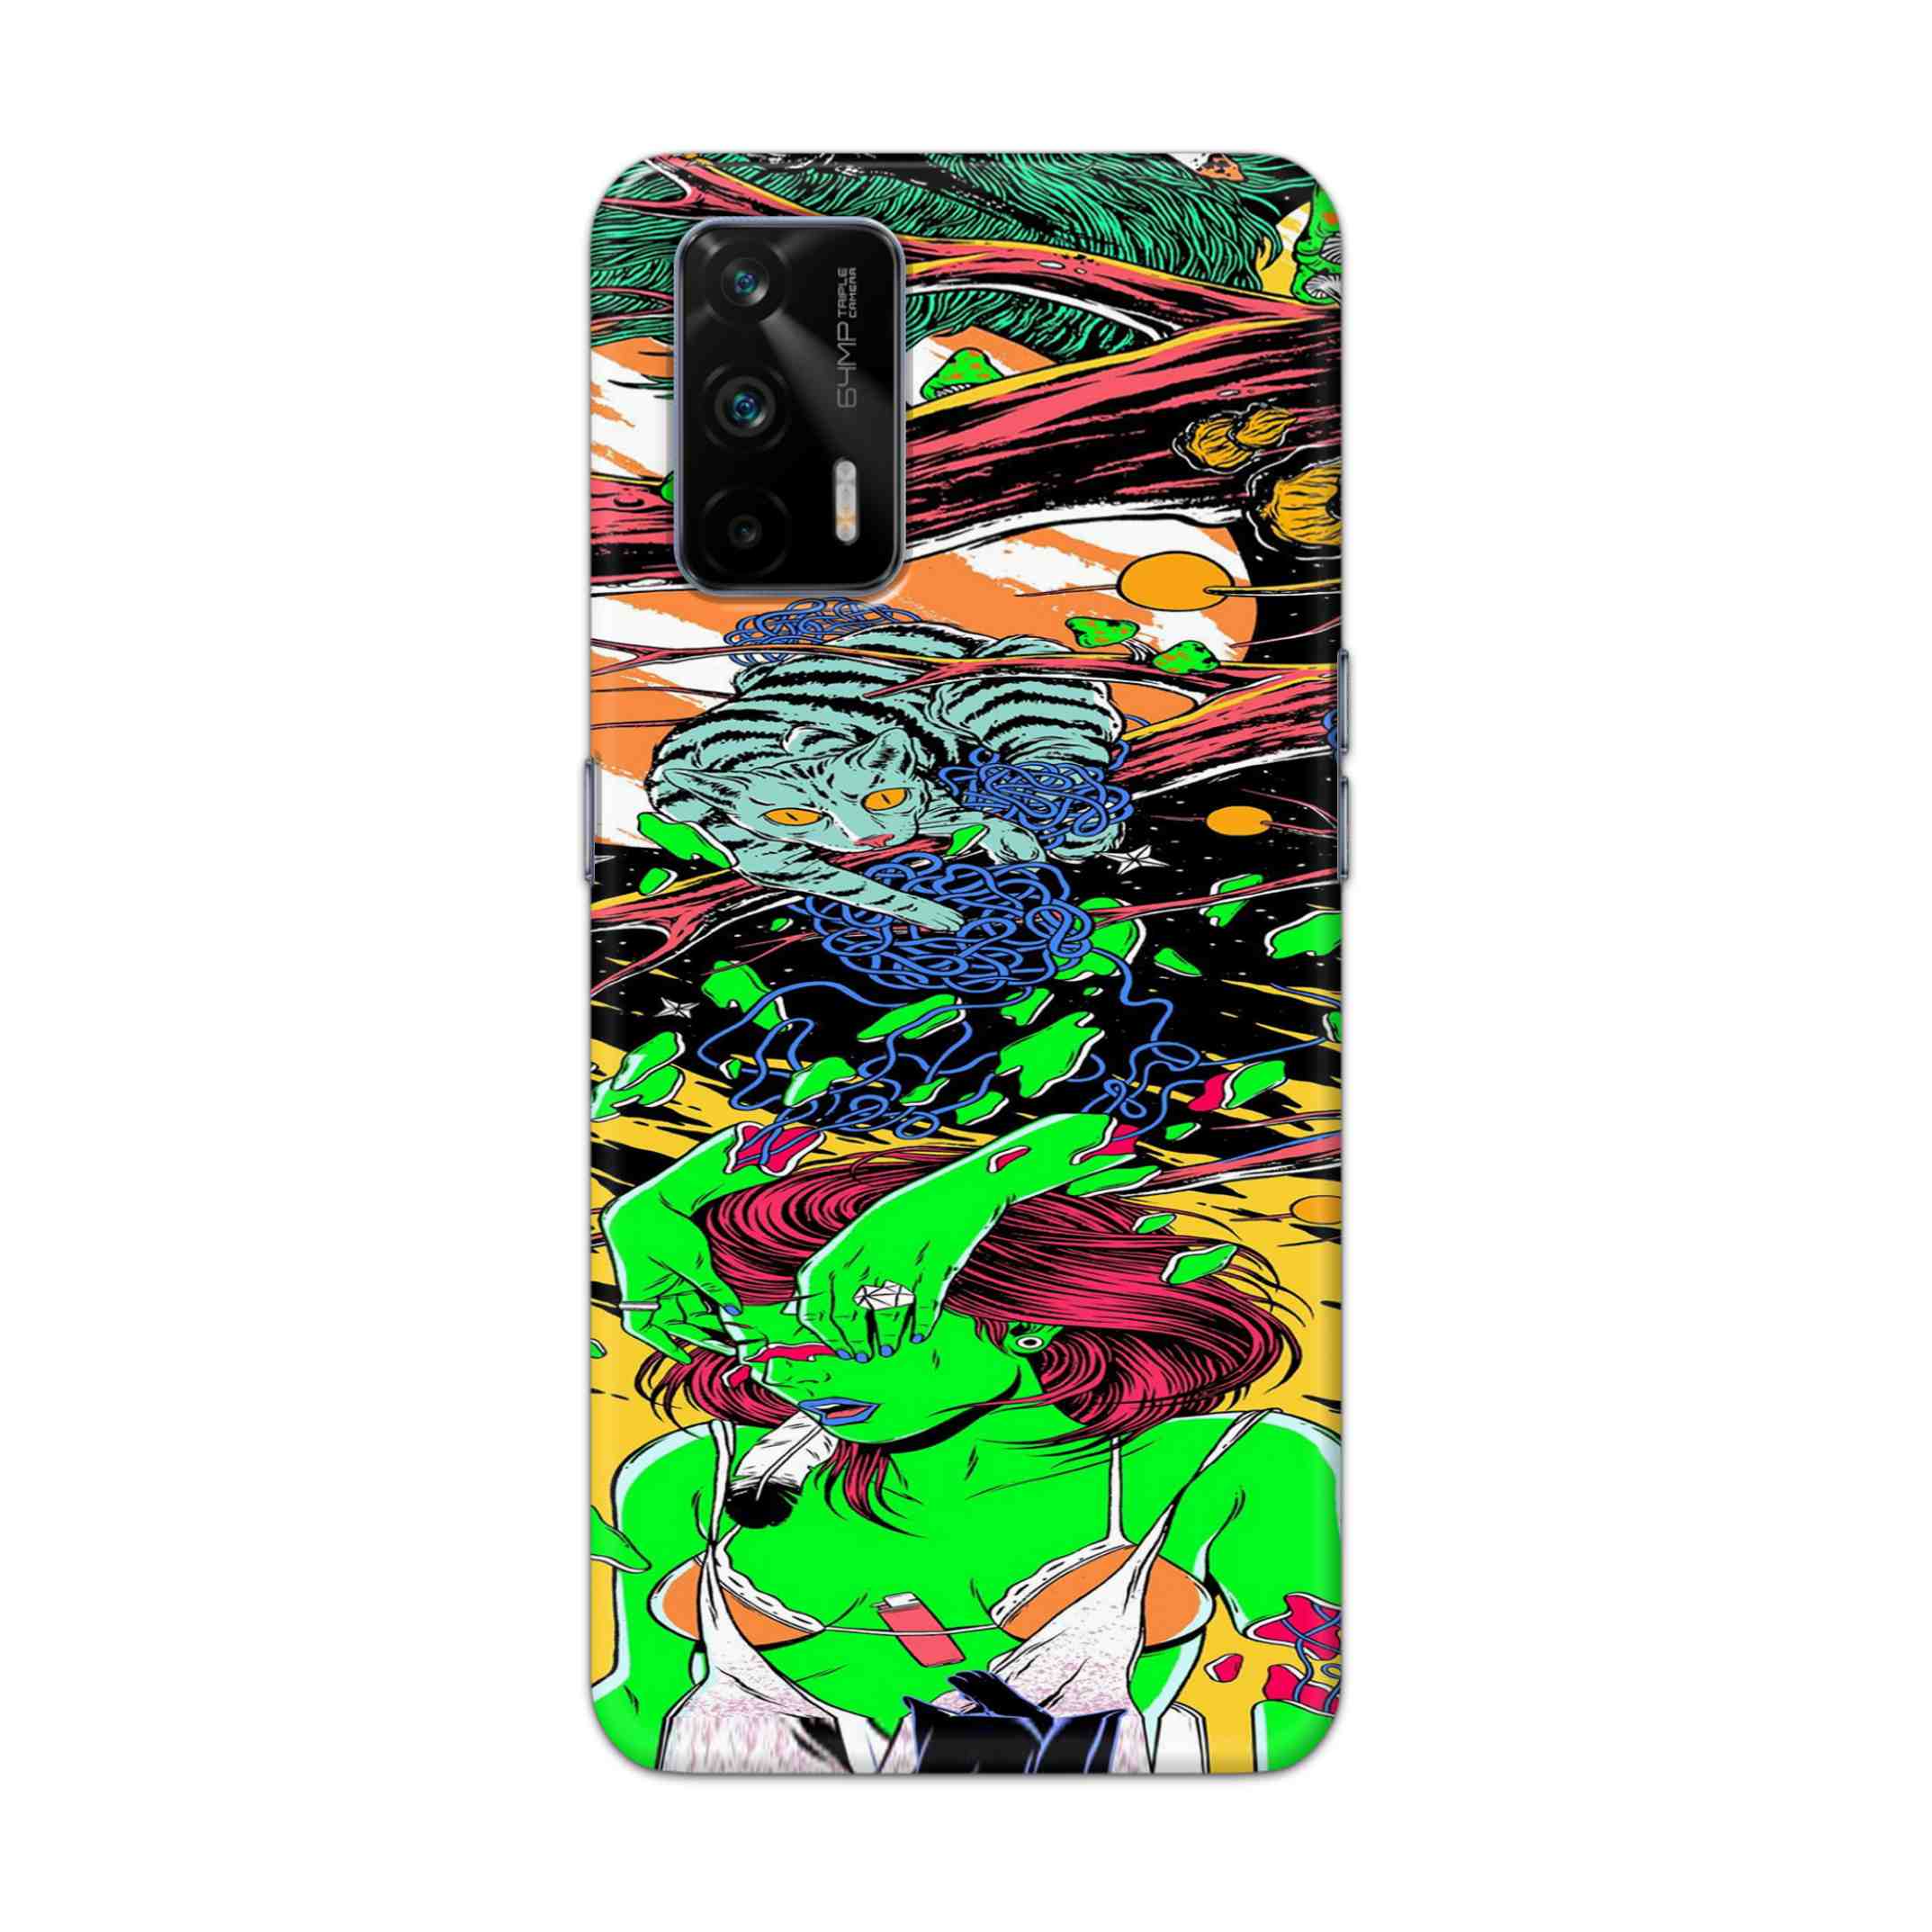 Buy Green Girl Art Hard Back Mobile Phone Case Cover For Realme GT 5G Online